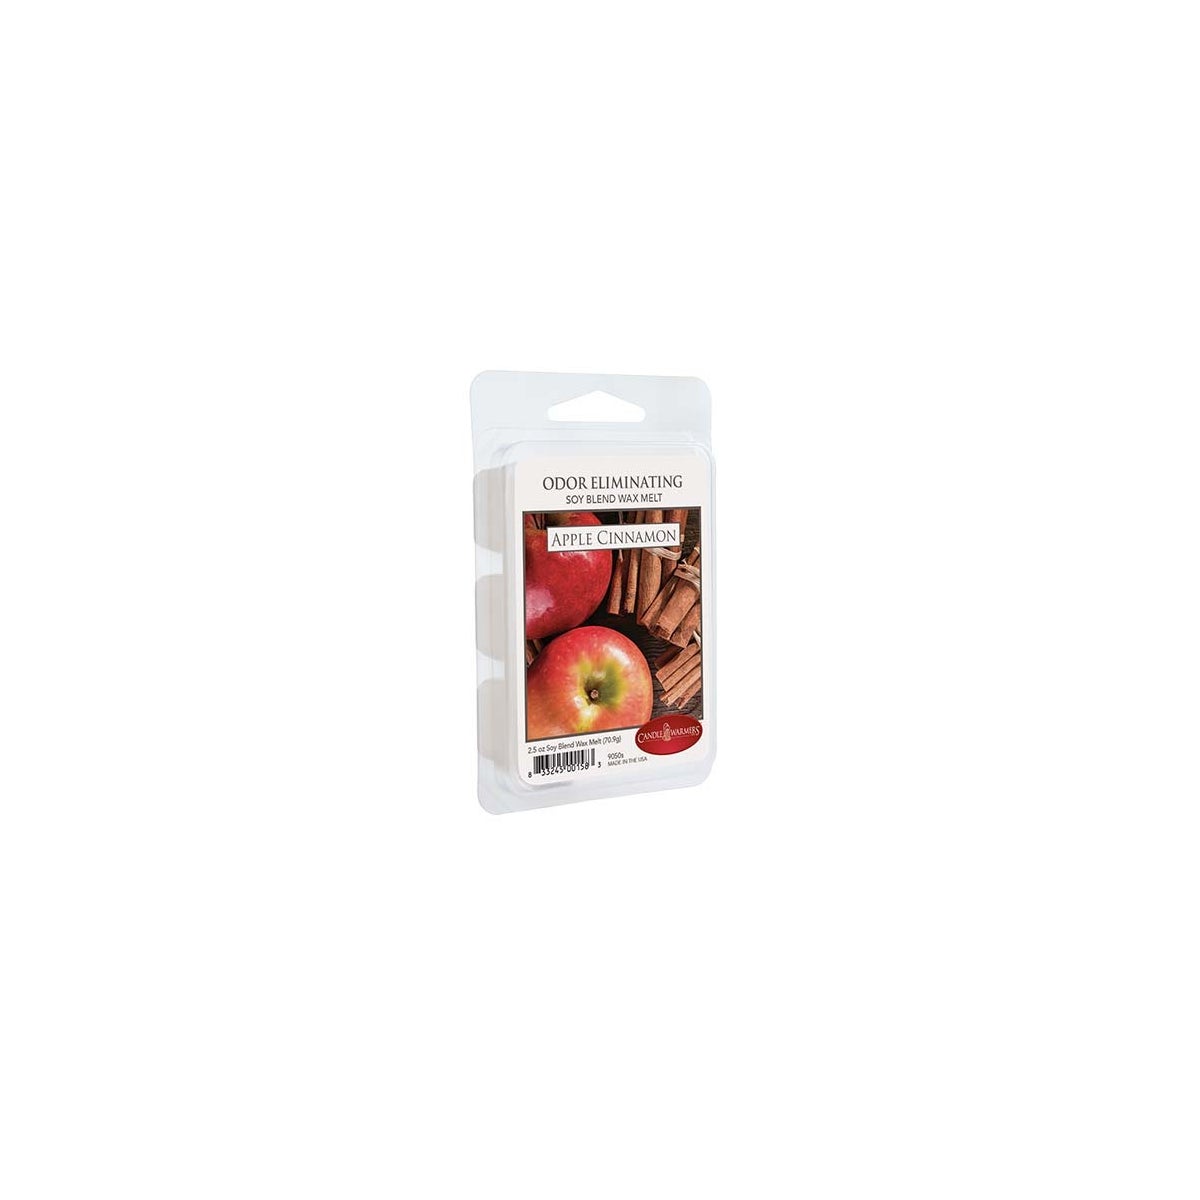 Odor Eliminating Wax Melts 2.5 oz - Apple Cinnamon